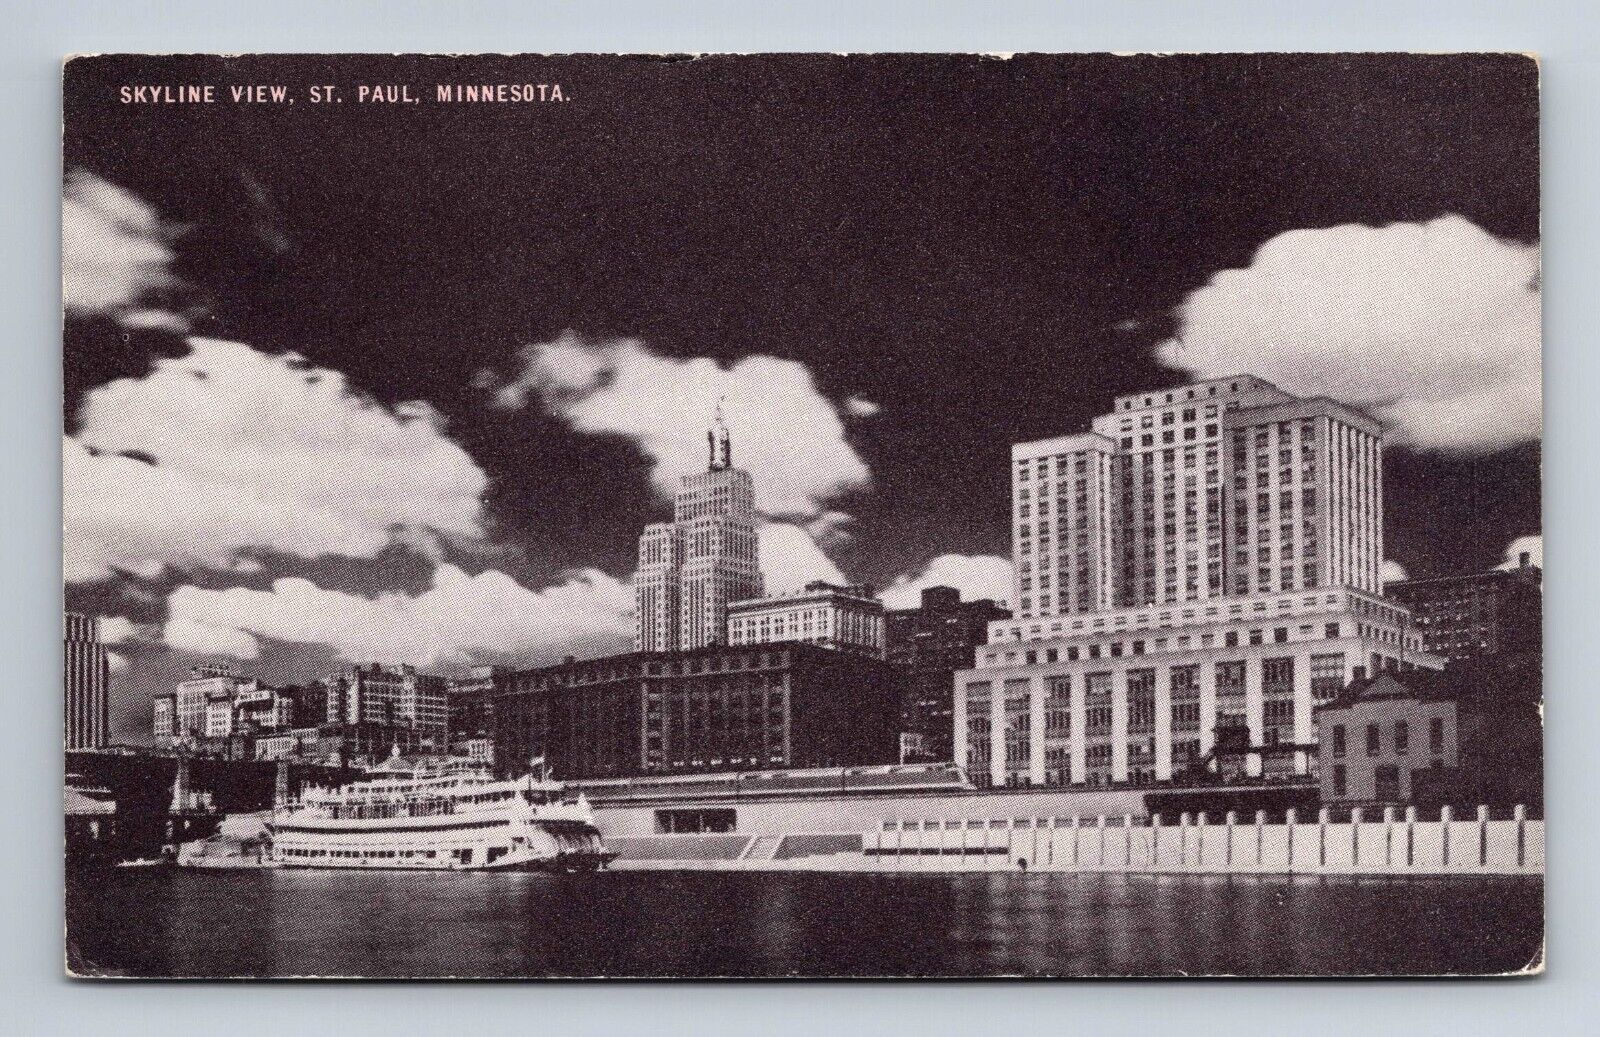 Skyline View St. Paul Minnesota Tour Boat Conoco Touraide Advertising Postcard